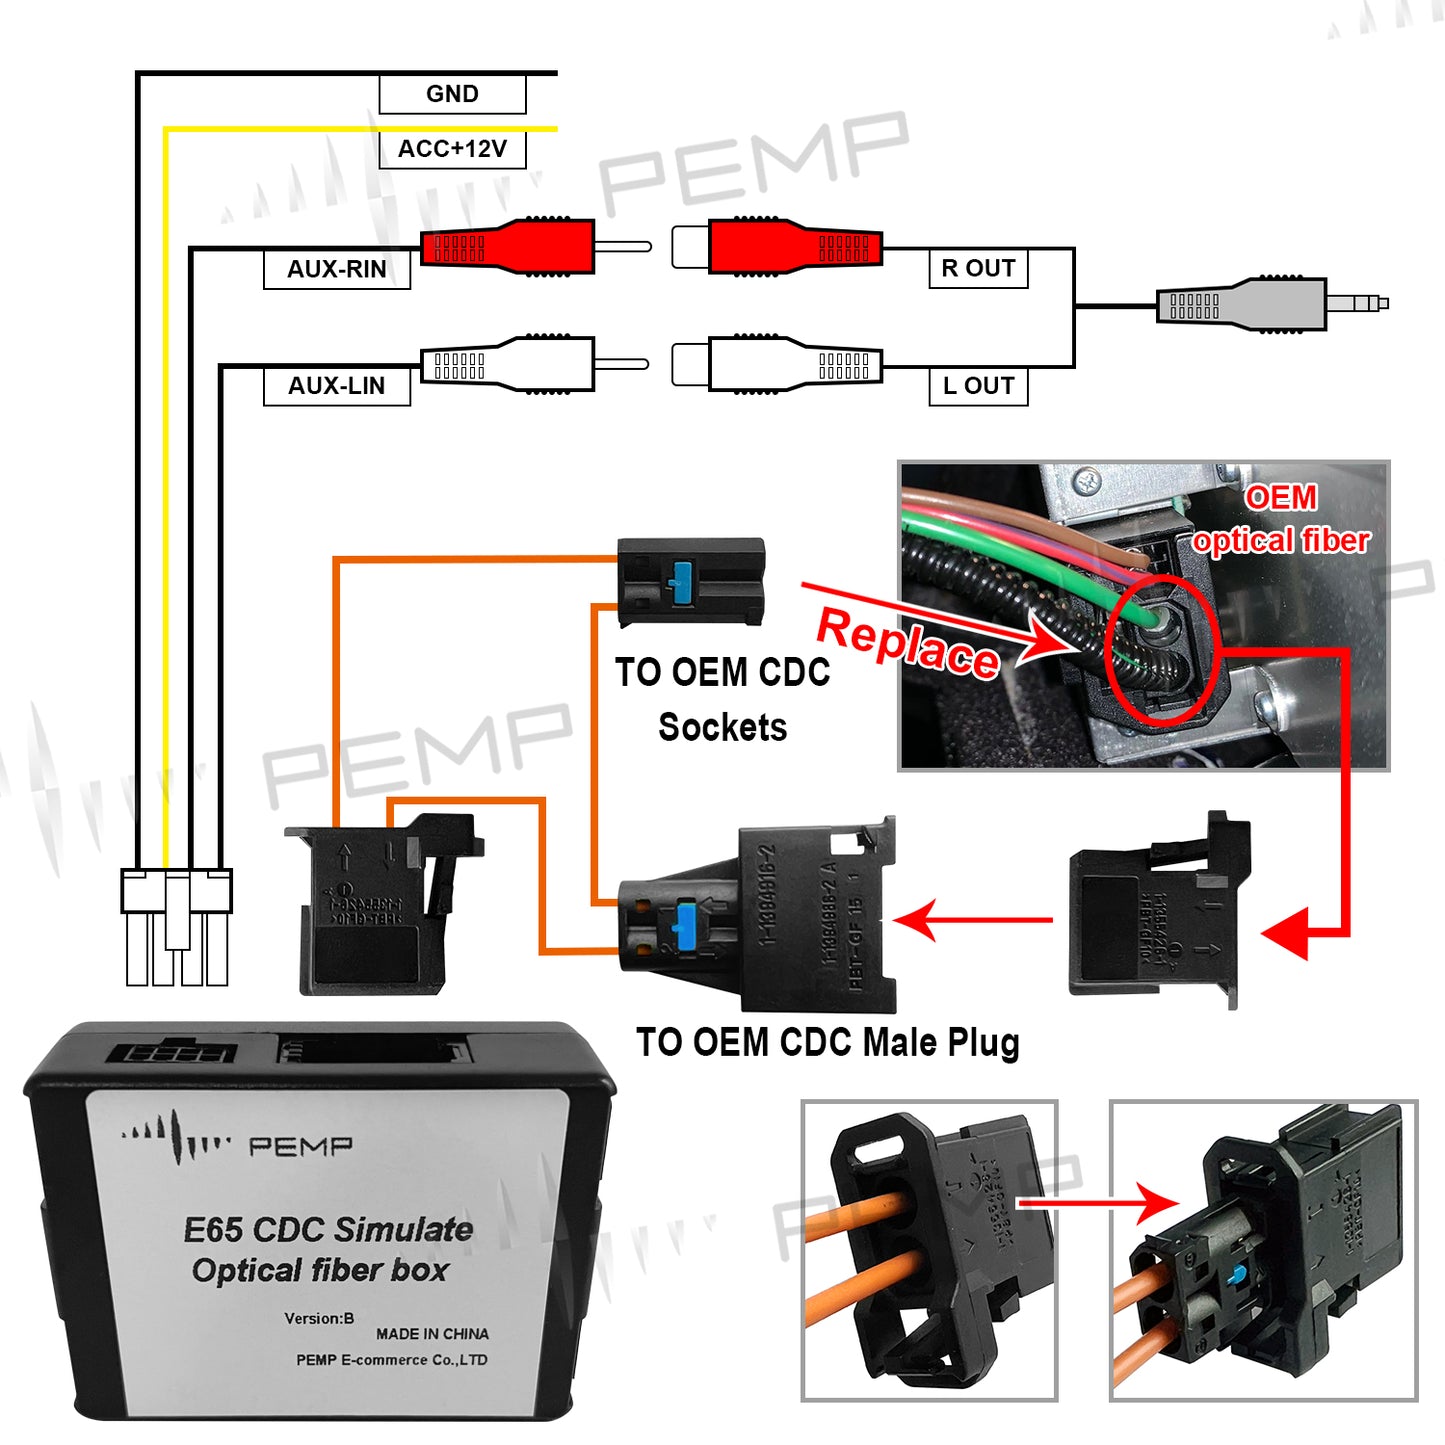 PEMP E65 E66 CDC Simulate Optical Fiber Box for BMW E65 aux Adapter